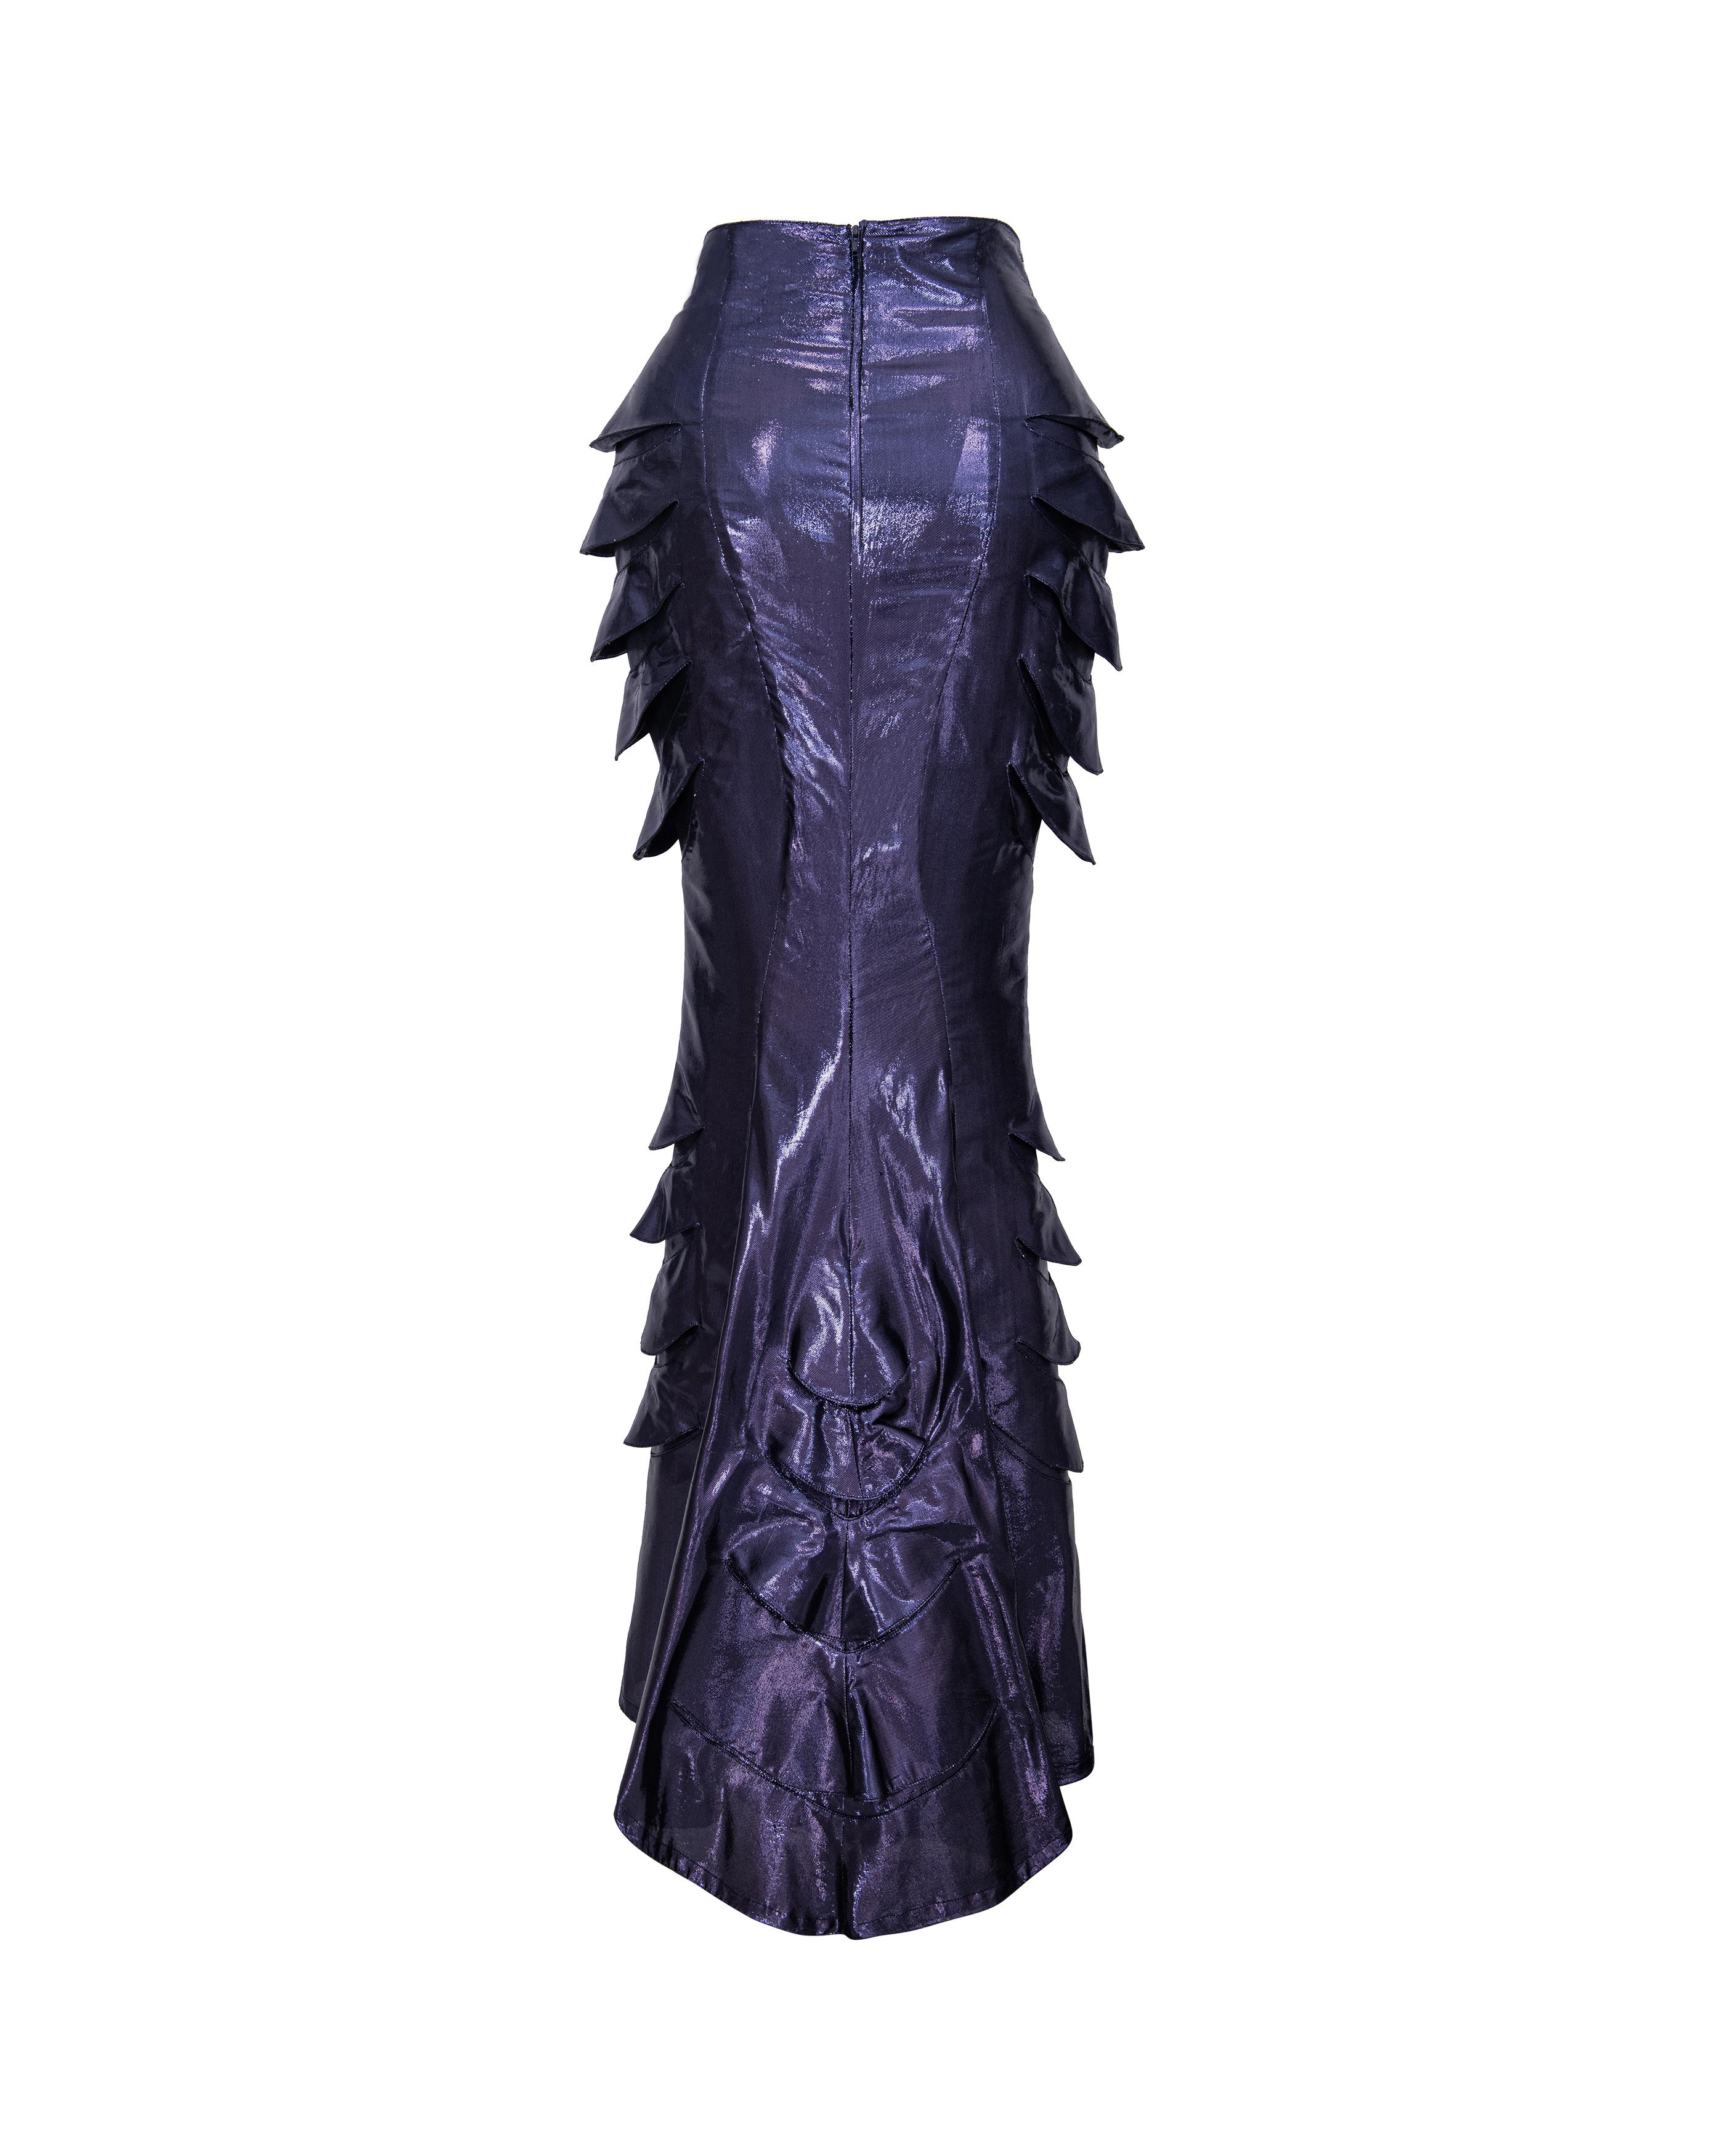 S/S 1989 Thierry Mugler 'Atlantis' Collection Metallic Mermaid Skirt Set 13